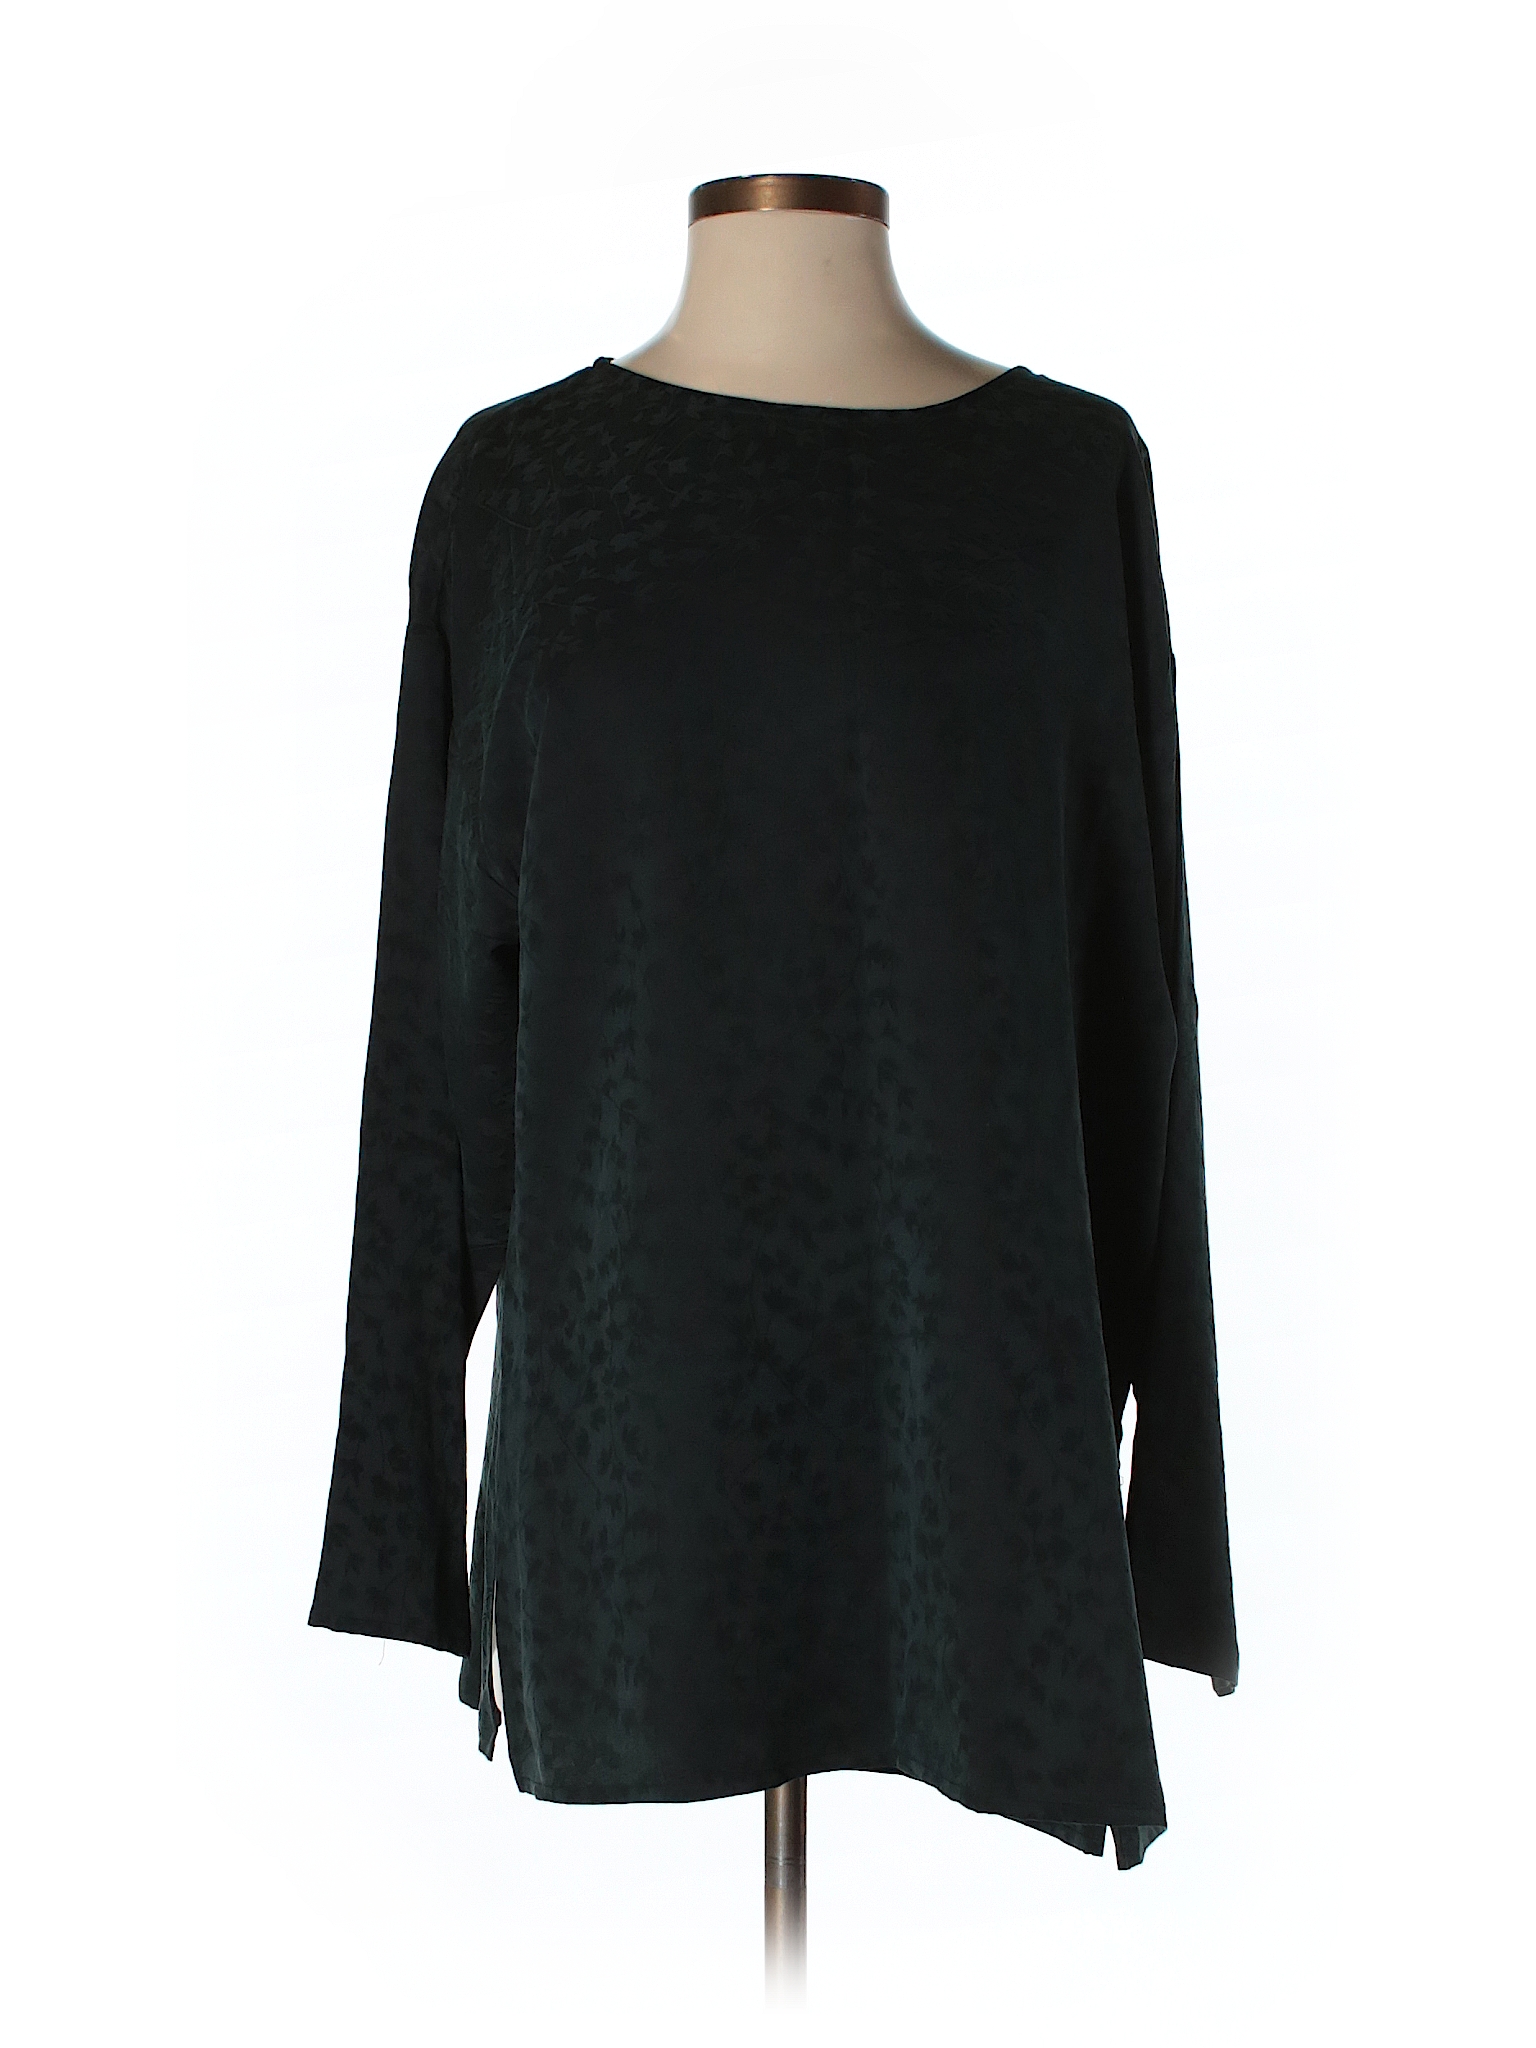 Eileen Fisher 100% Silk Solid Black Long Sleeve Silk Top Size S - 81% ...